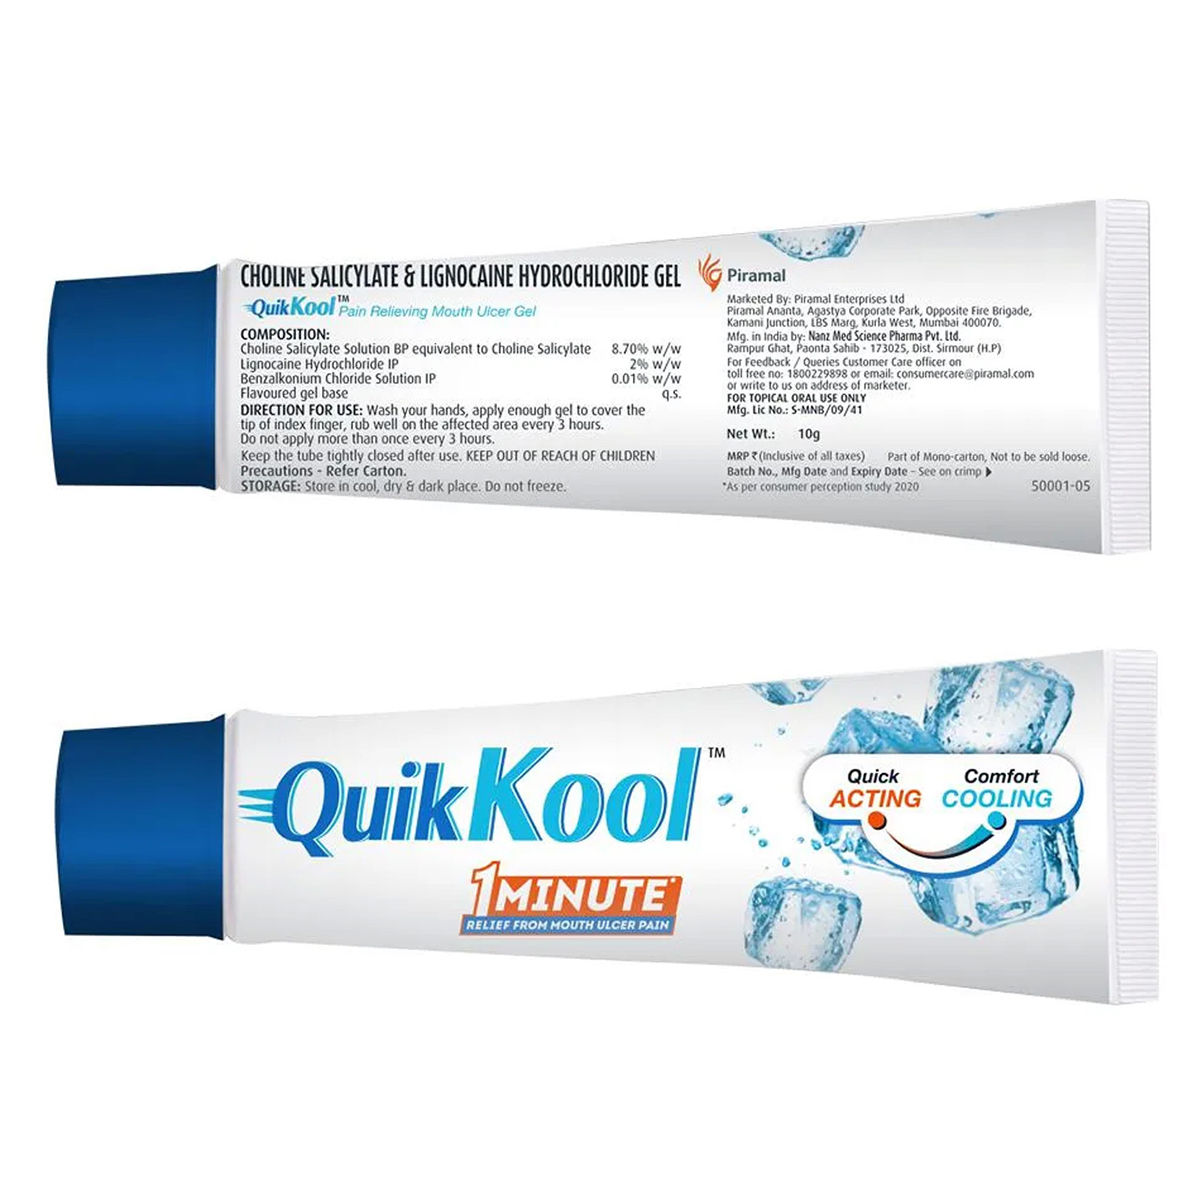 Buy Quik Kool Mouth Ulcer Gel, 10 gm Online